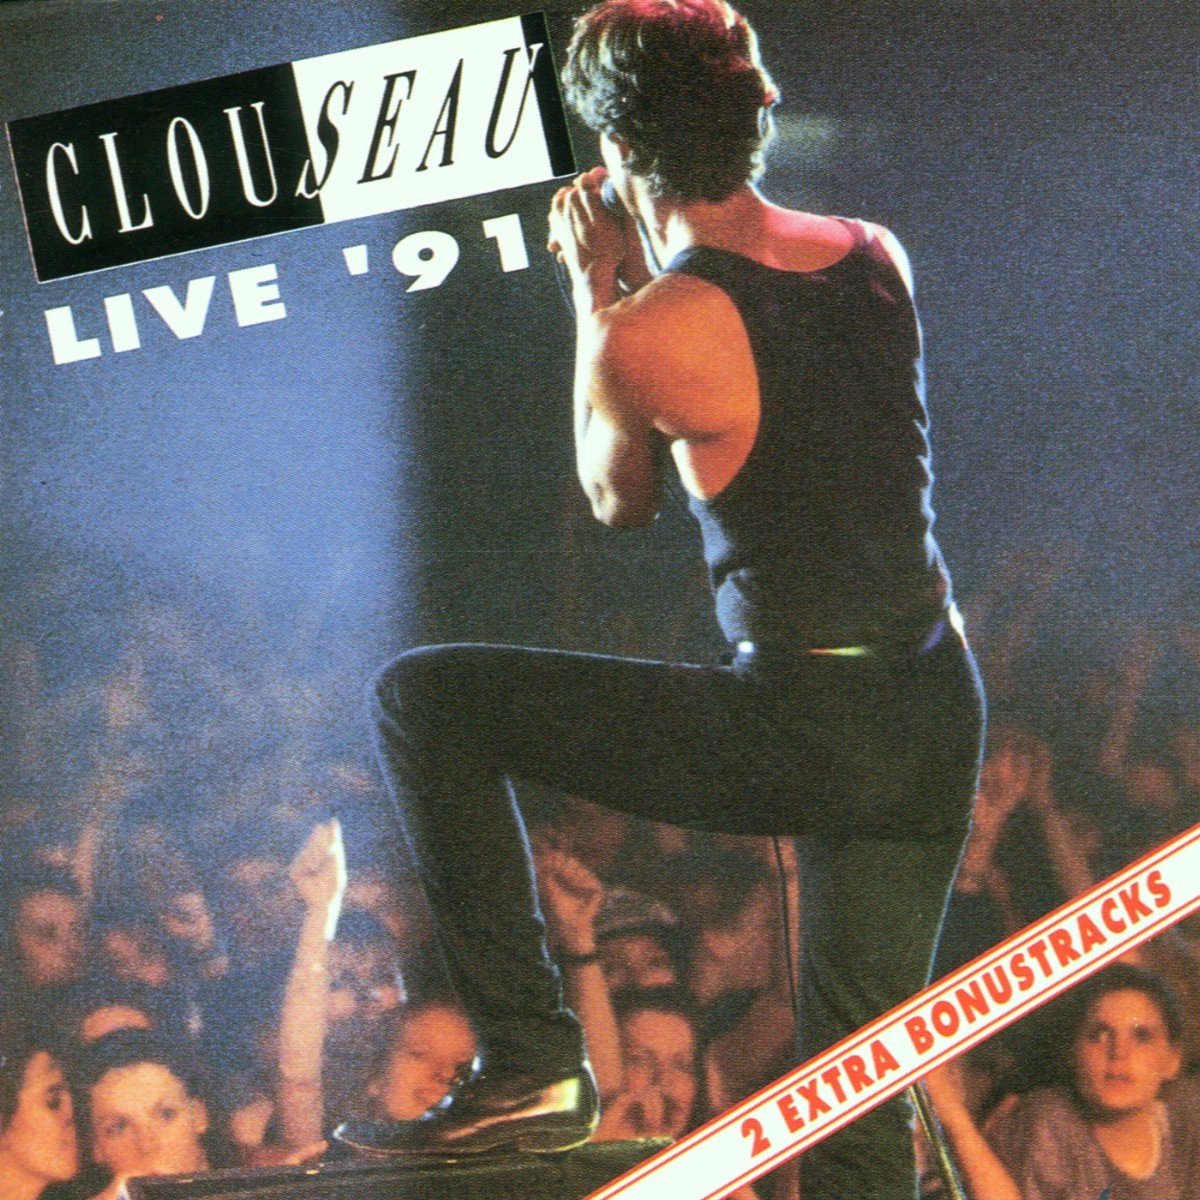 Clouseau - Live 91 (CD) - Clouseau